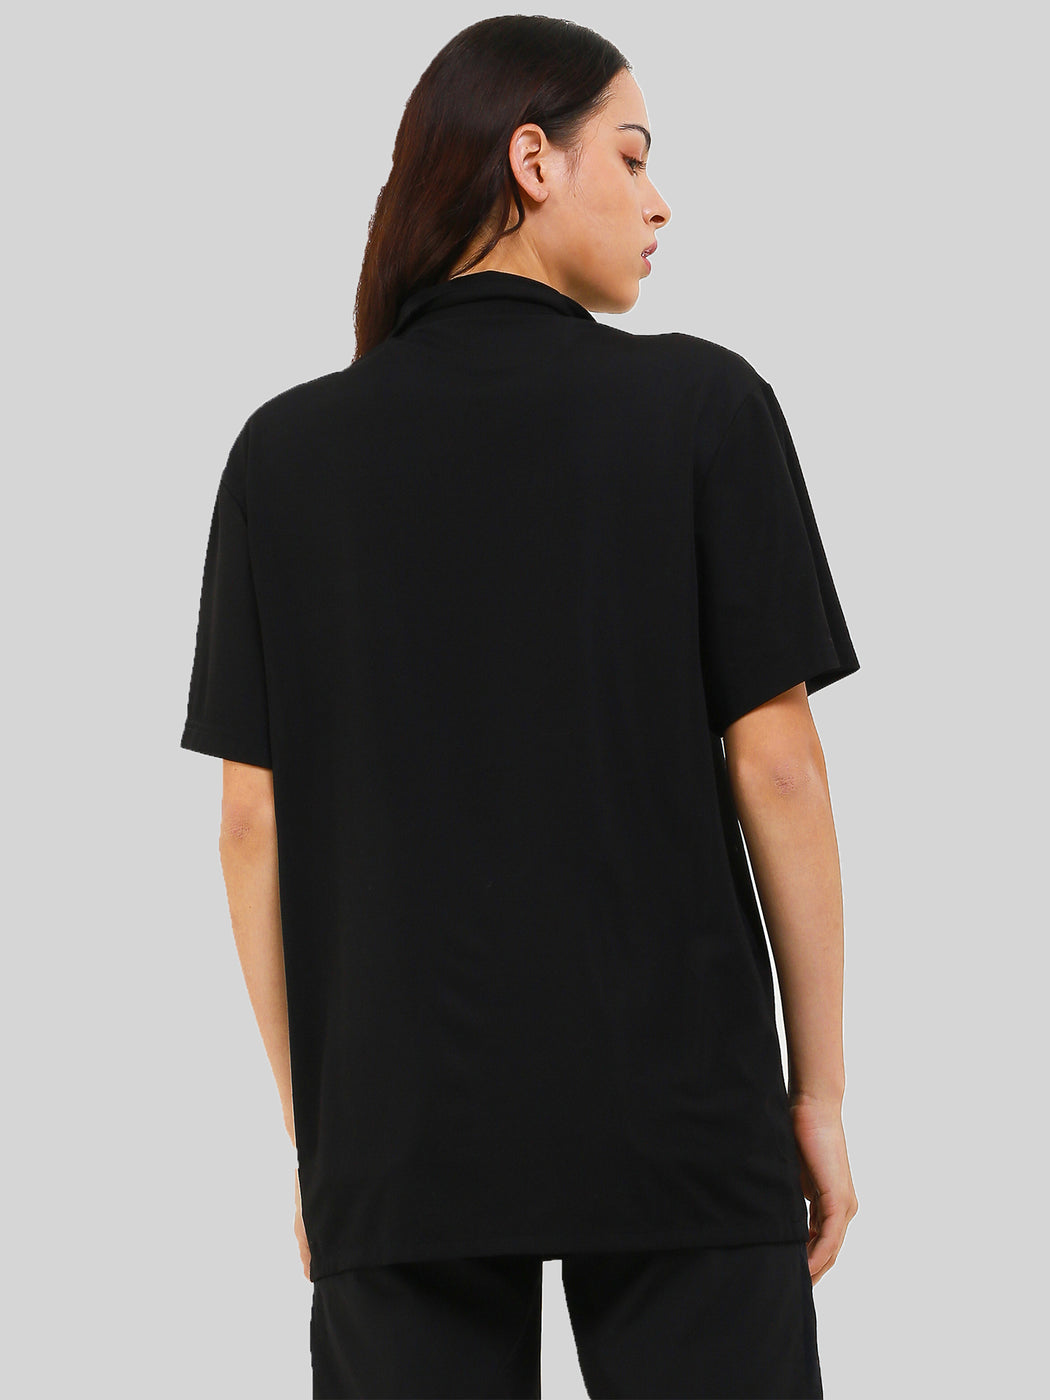 Unisex Ultimate Utilitarian Shirt Female Black